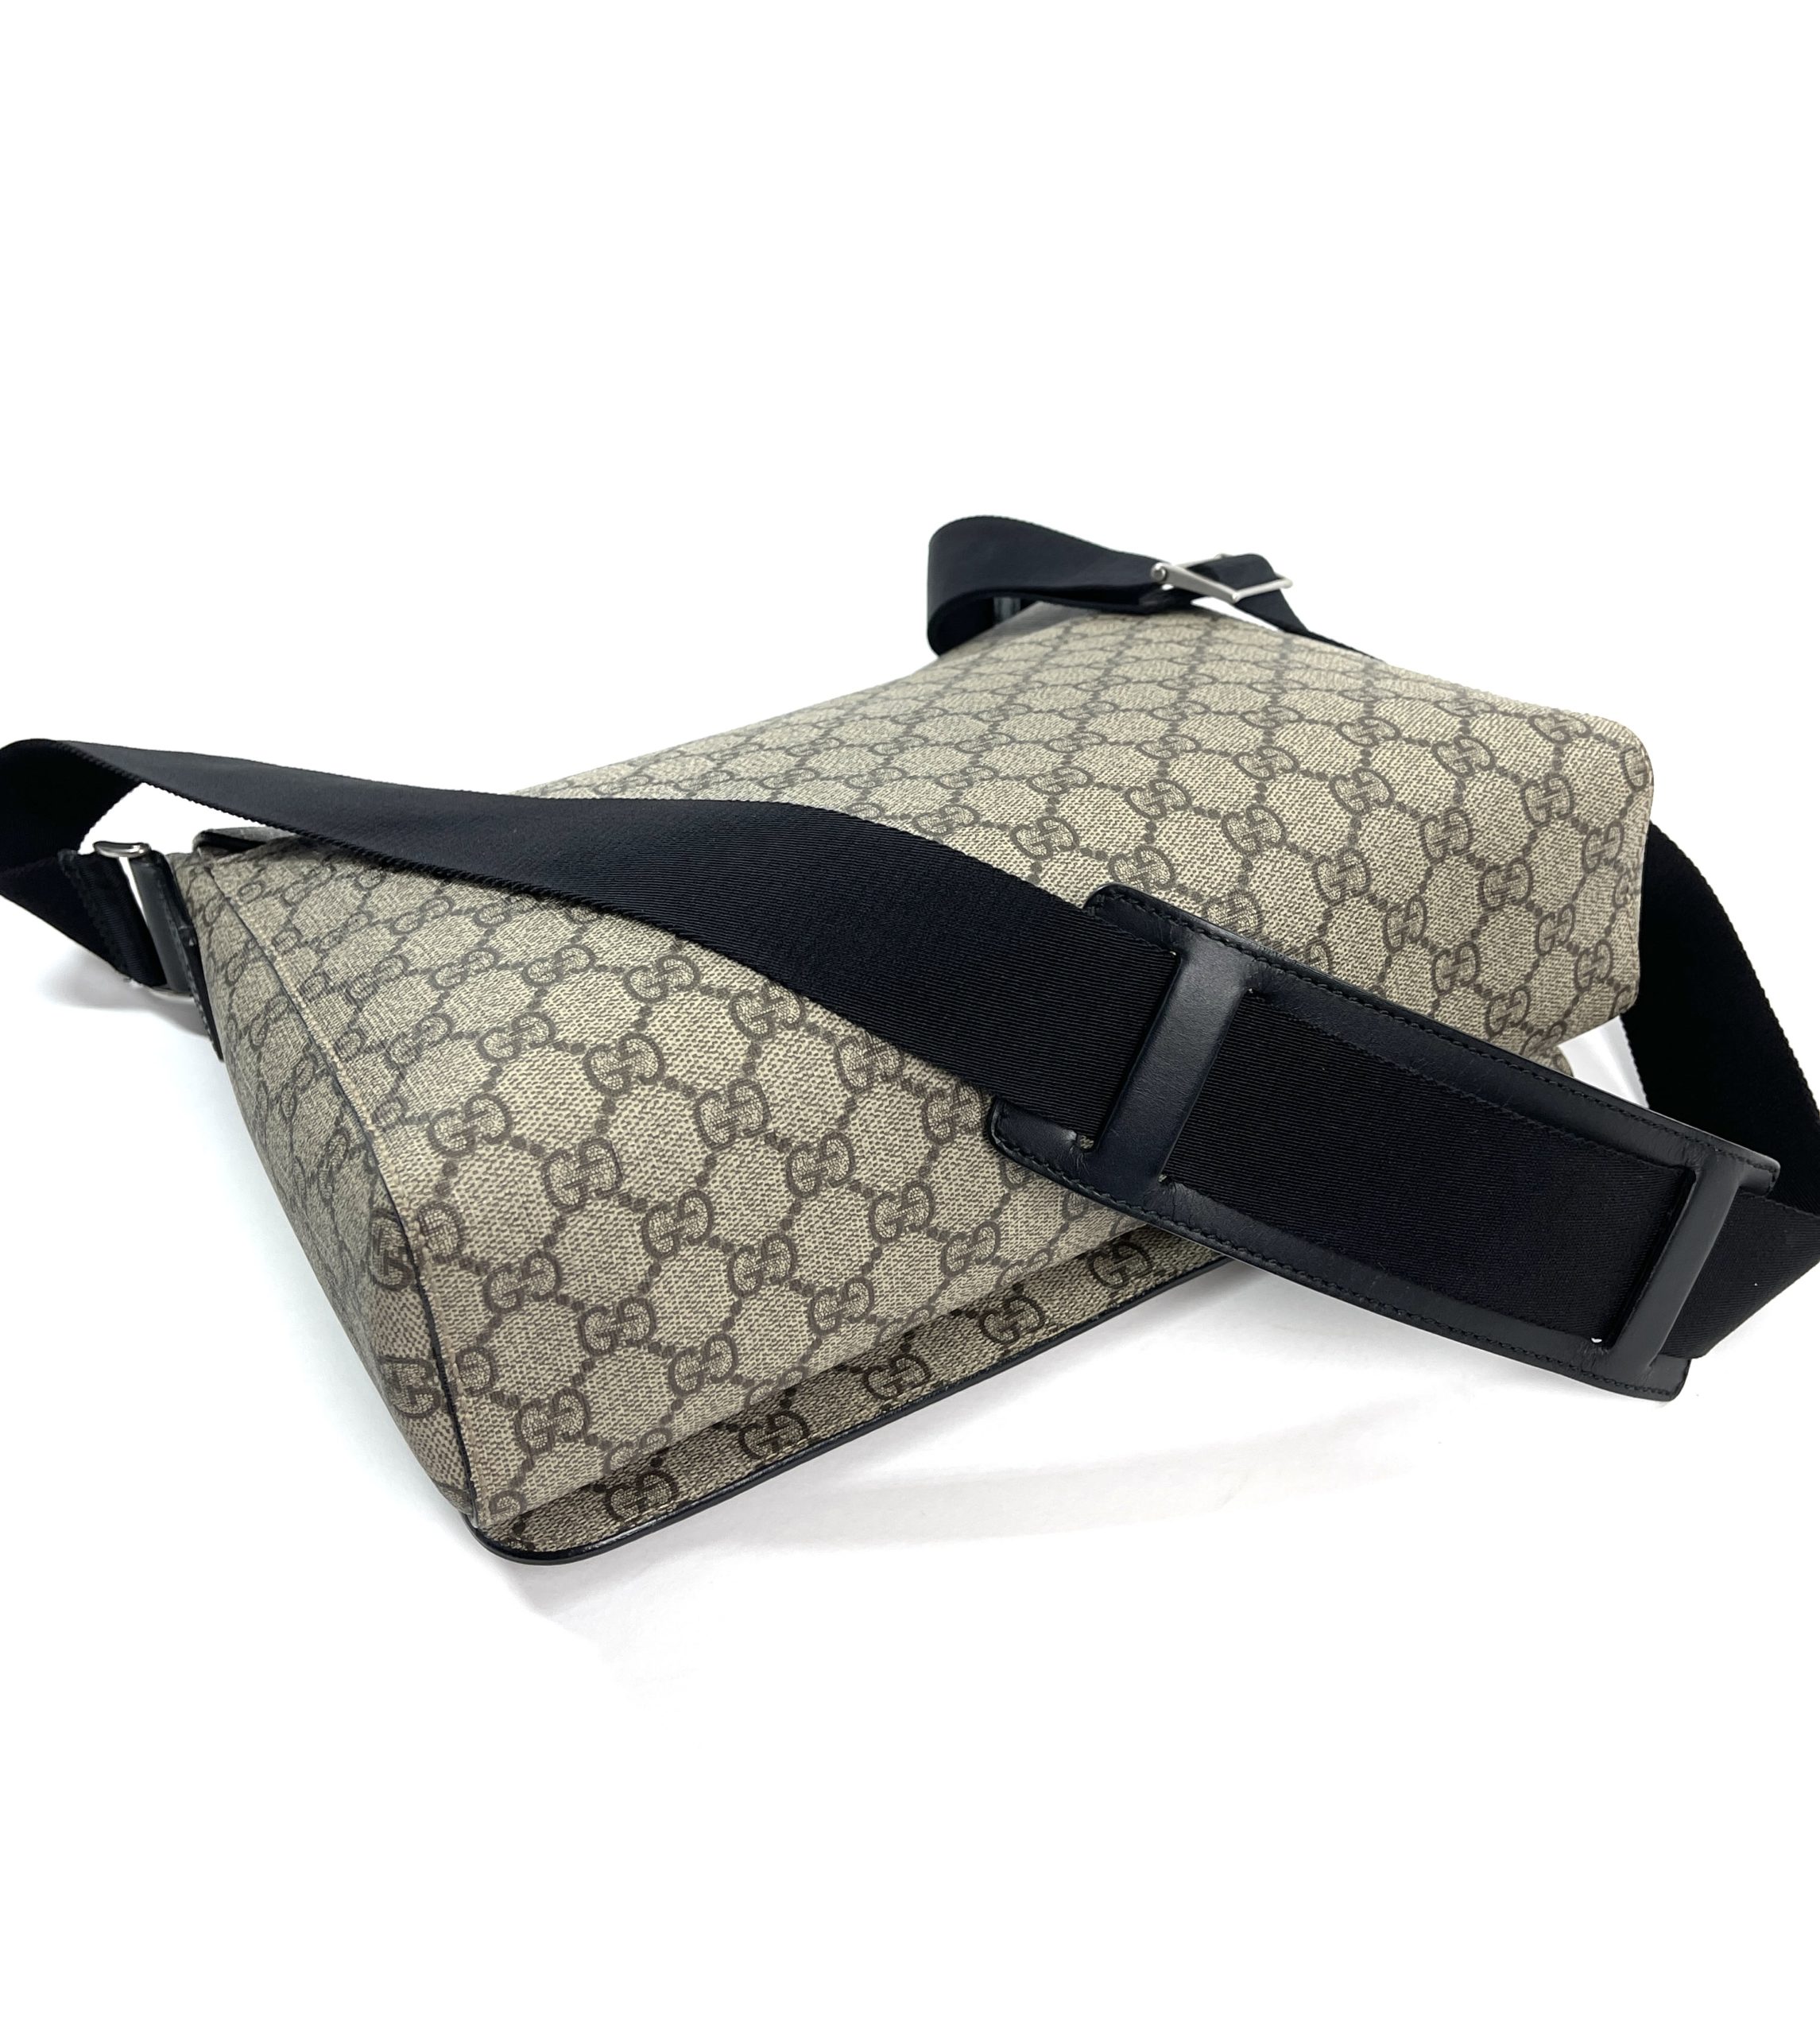 Gucci GG Supreme Black Flap Messenger Bag